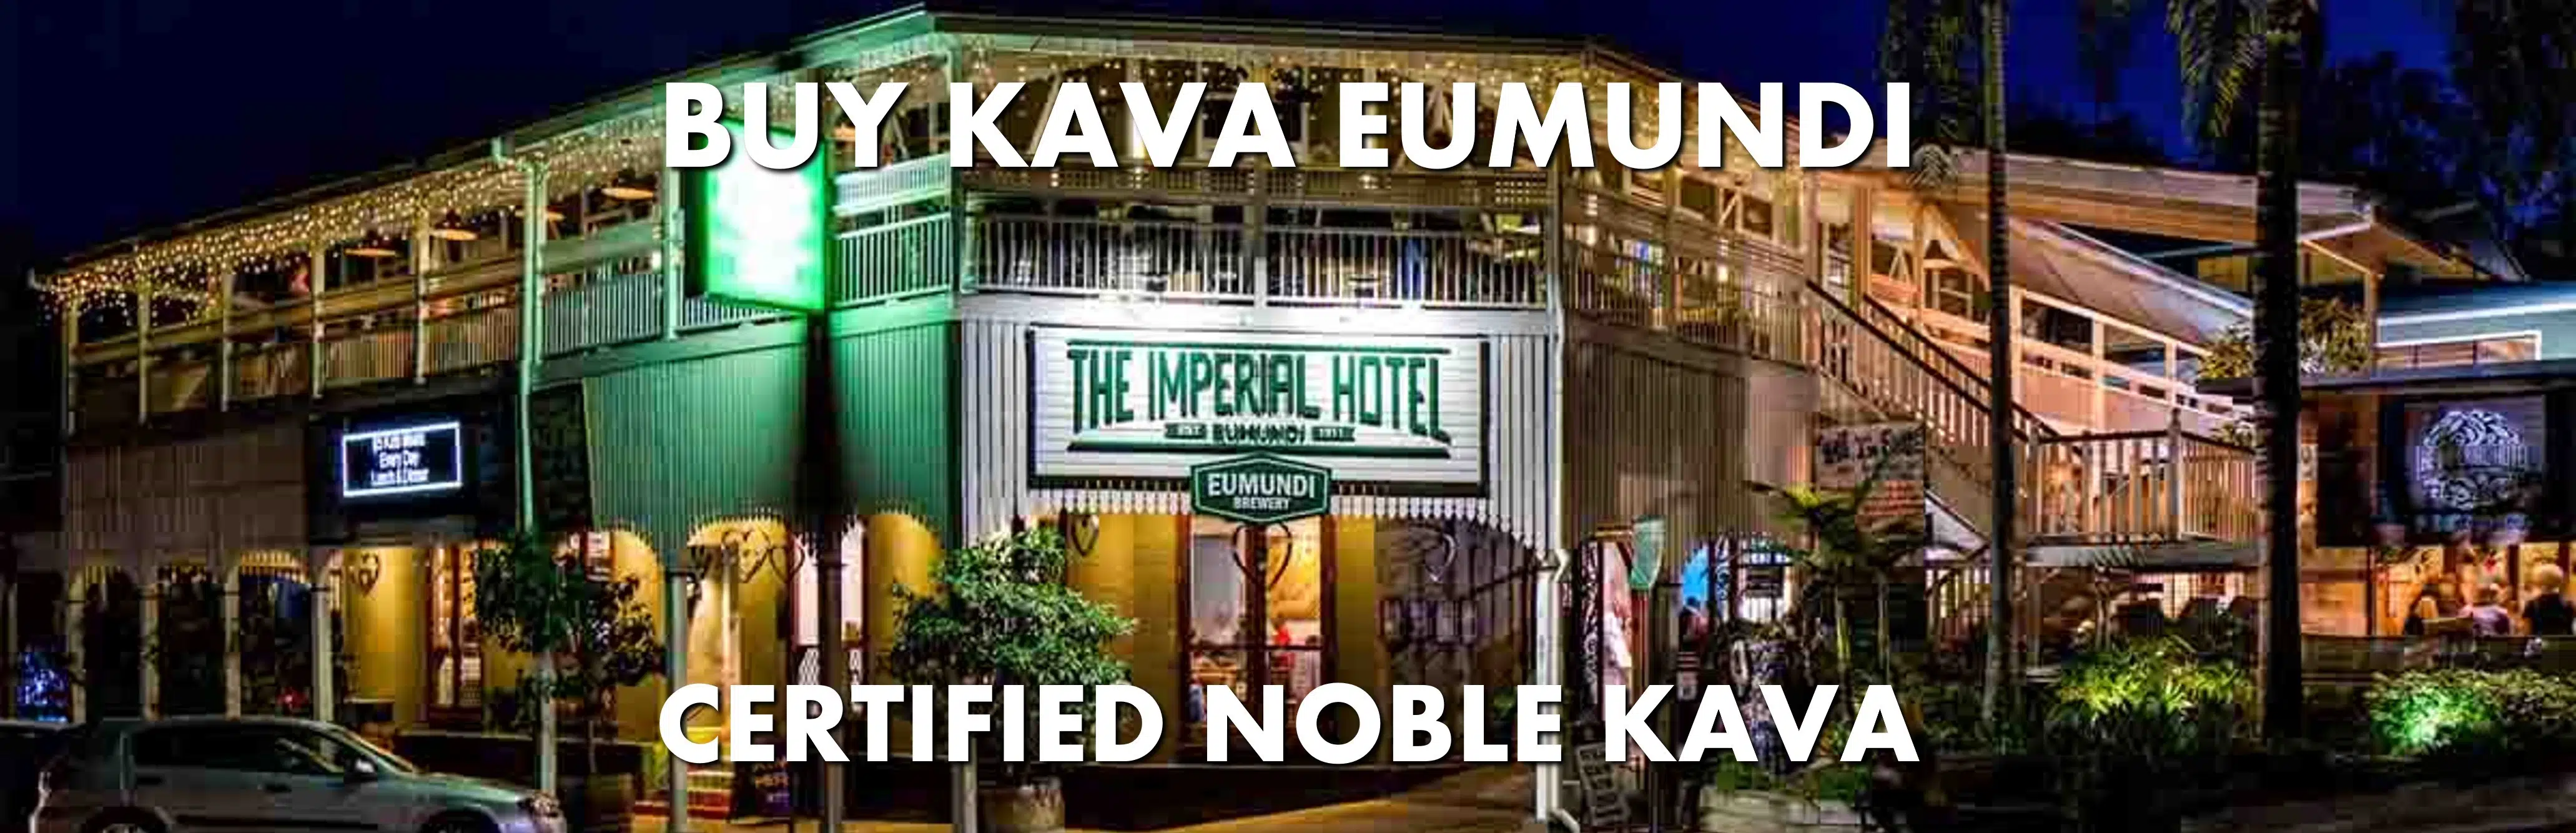 Imperial Hotel in Eumundi Sunshine Coast Queensland with caption Buy Kava Eumundi Certified Noble Kava